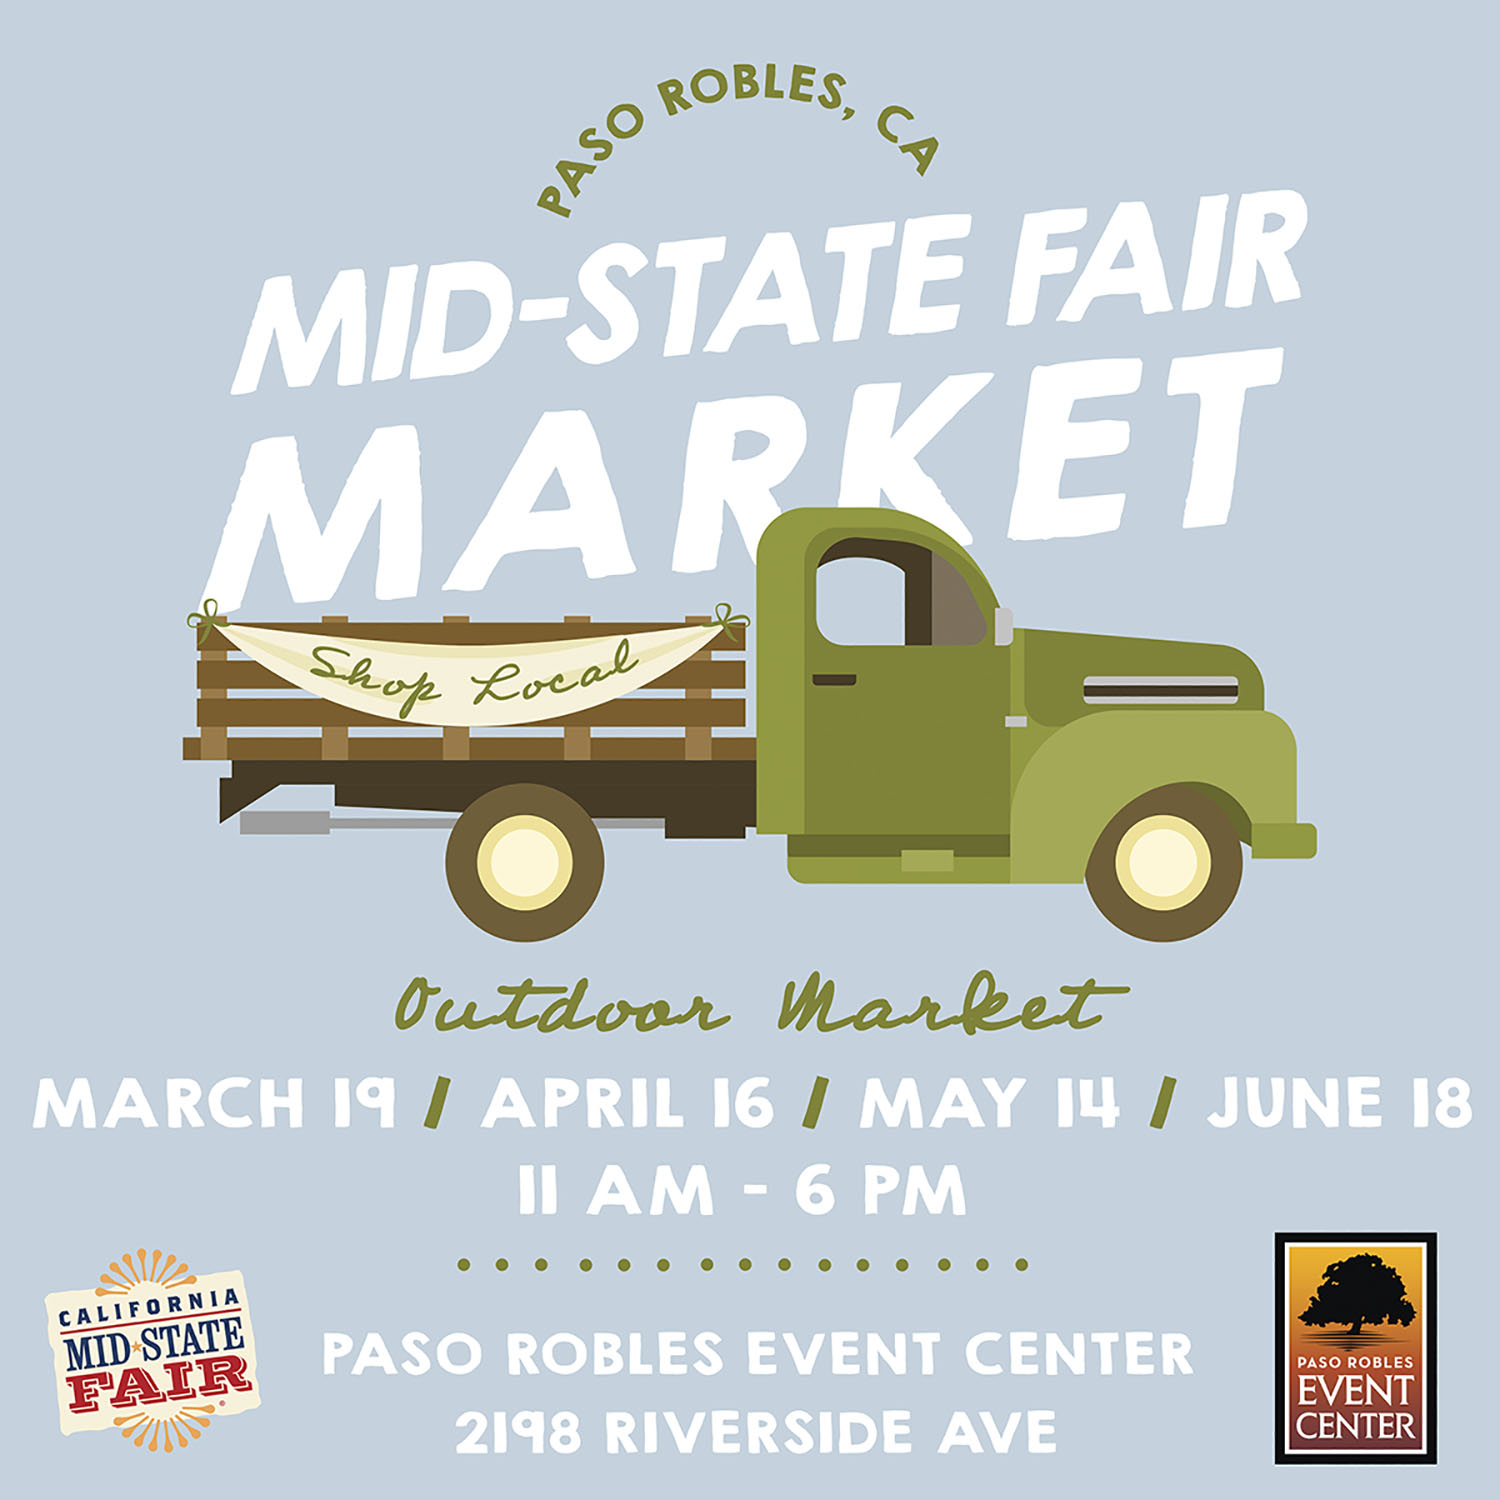 Paso Robles Event Center Announces MidState Fair Outdoor Market • Paso